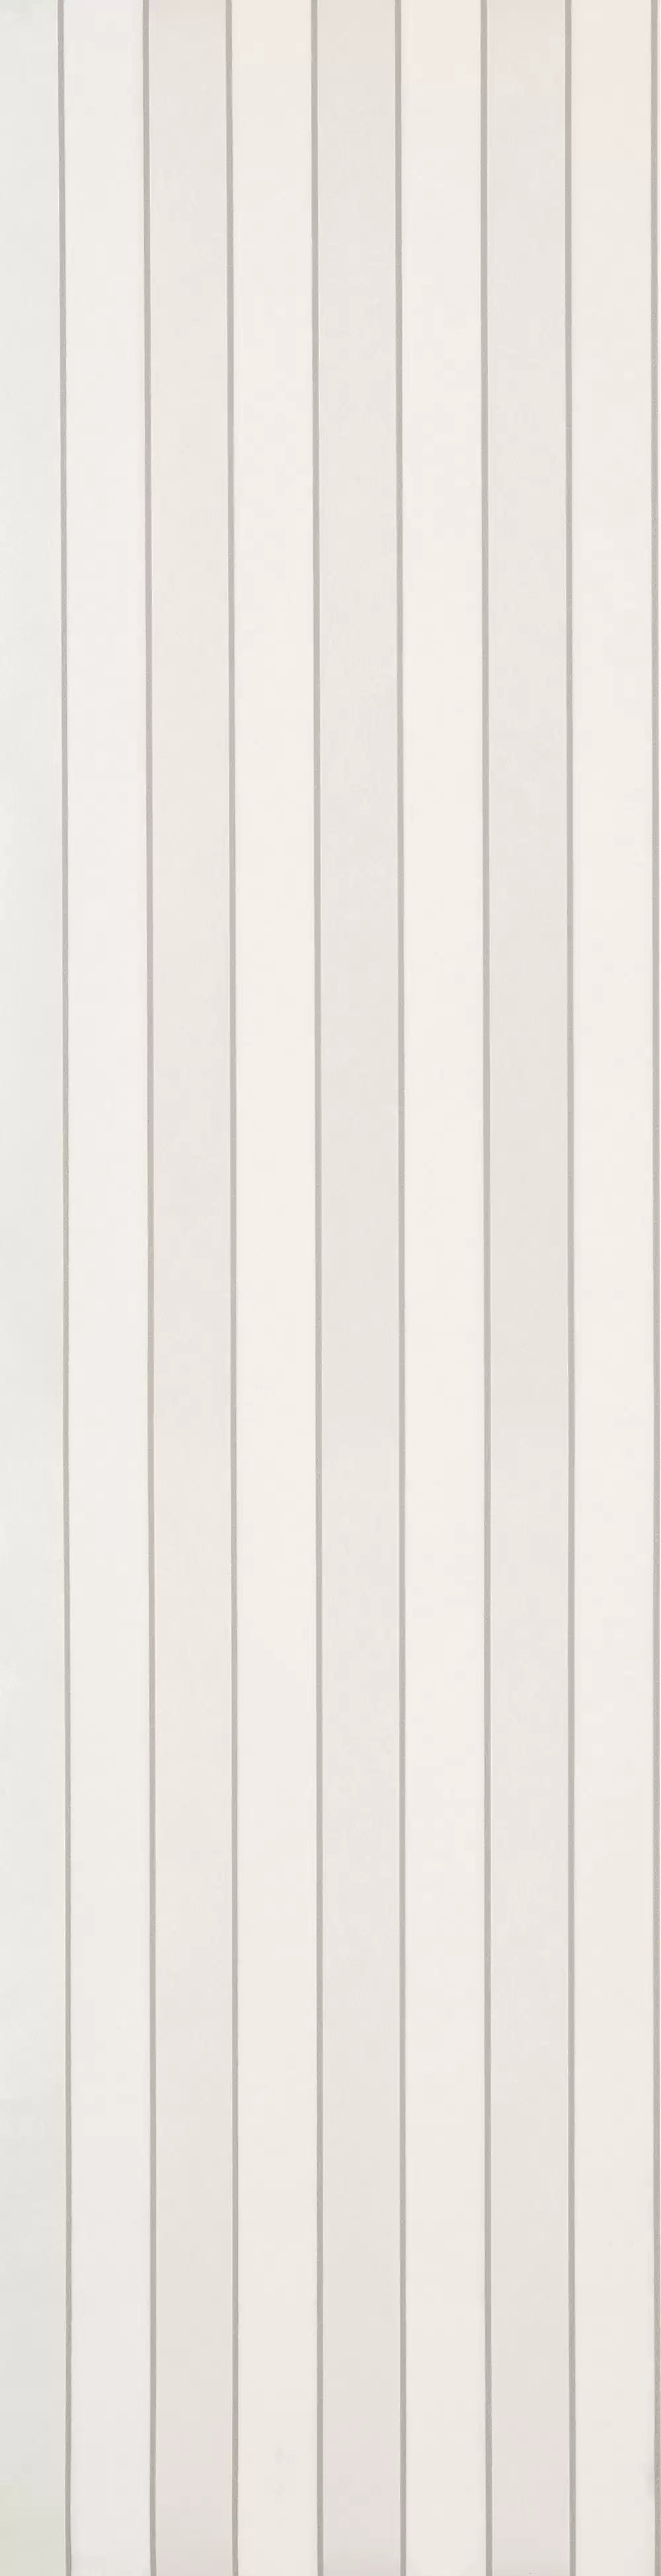 regency-stripe-snow